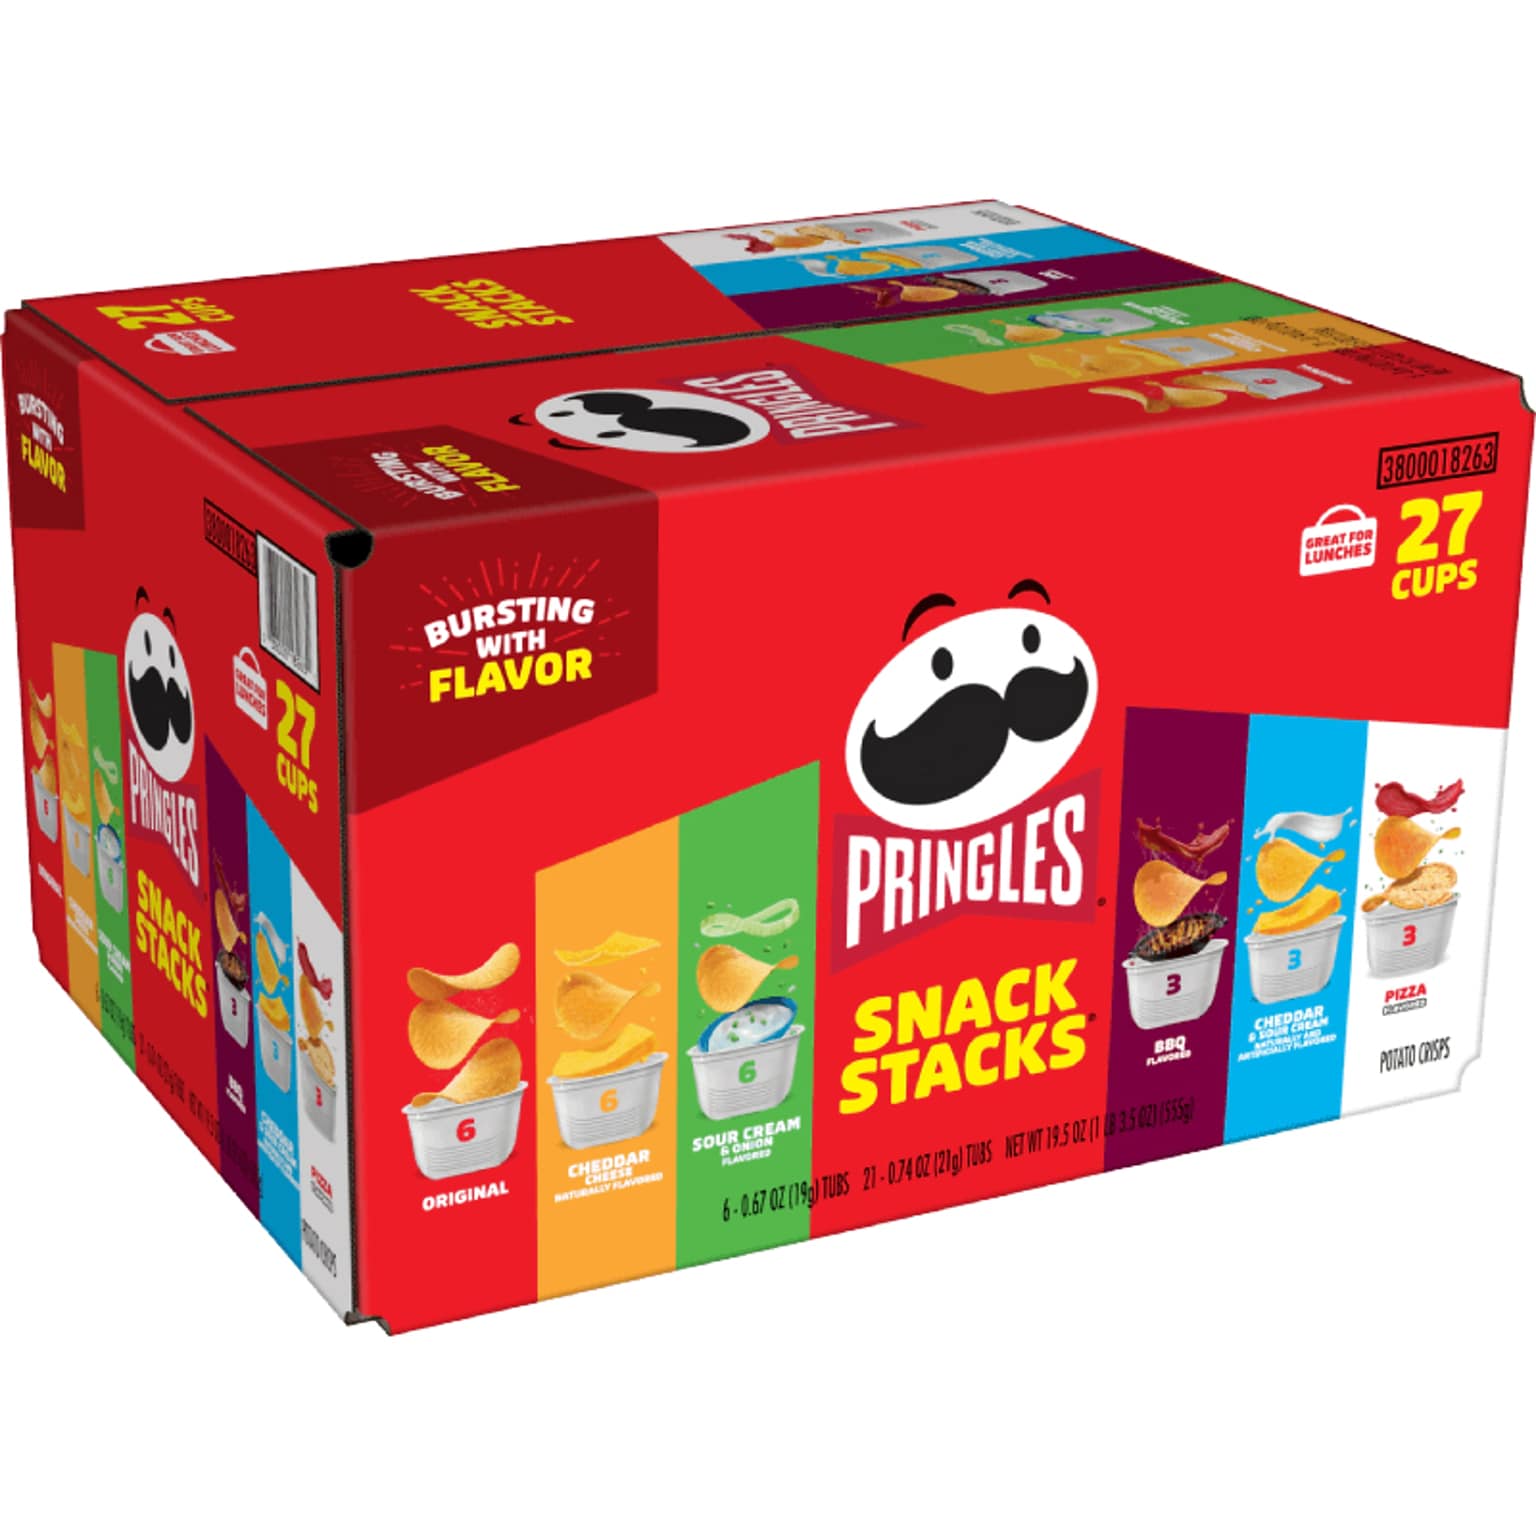 Pringles Snack Stack Variety Pack Crisps, 27 Tubs /Carton (3800018263)